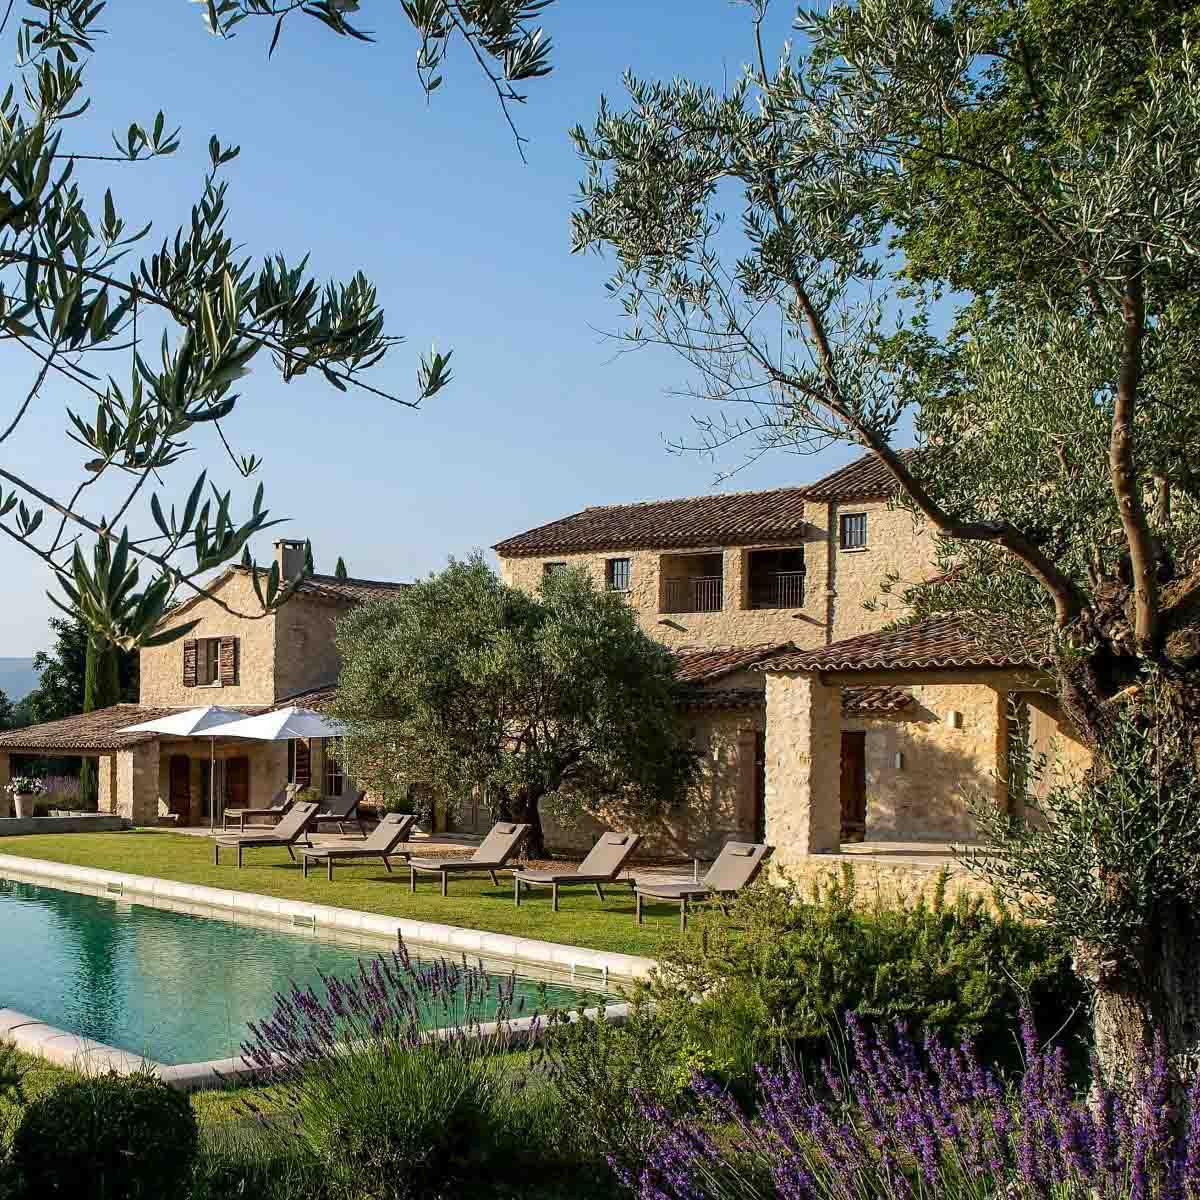 La villa à louer dans le Luberon, Bastide des Vallats © Coquillade Provence